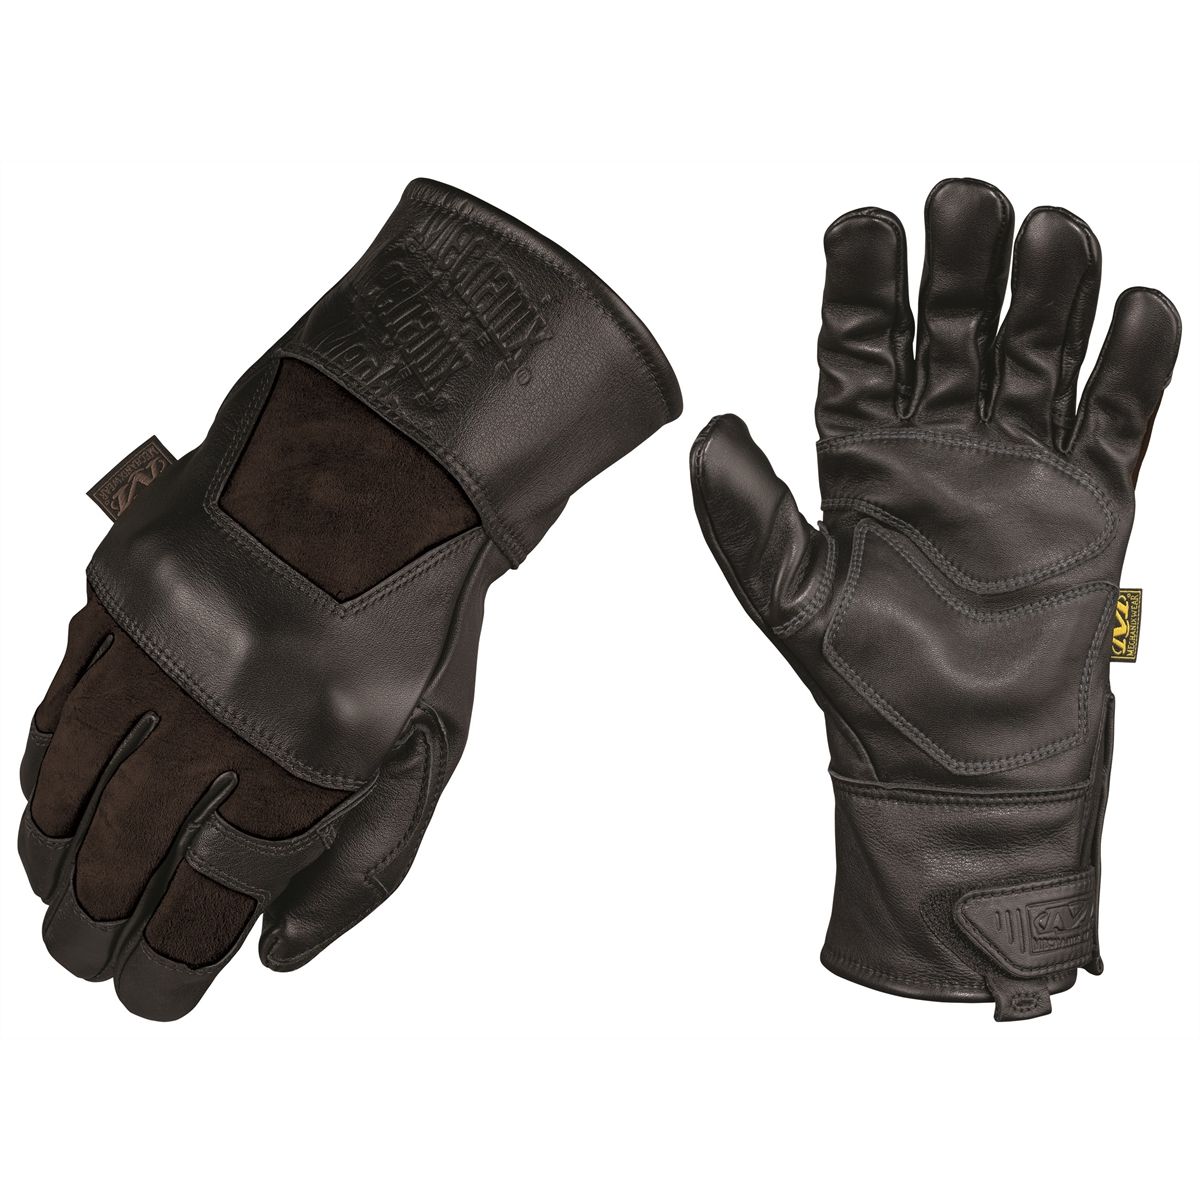 Fabricator Gloves Medium